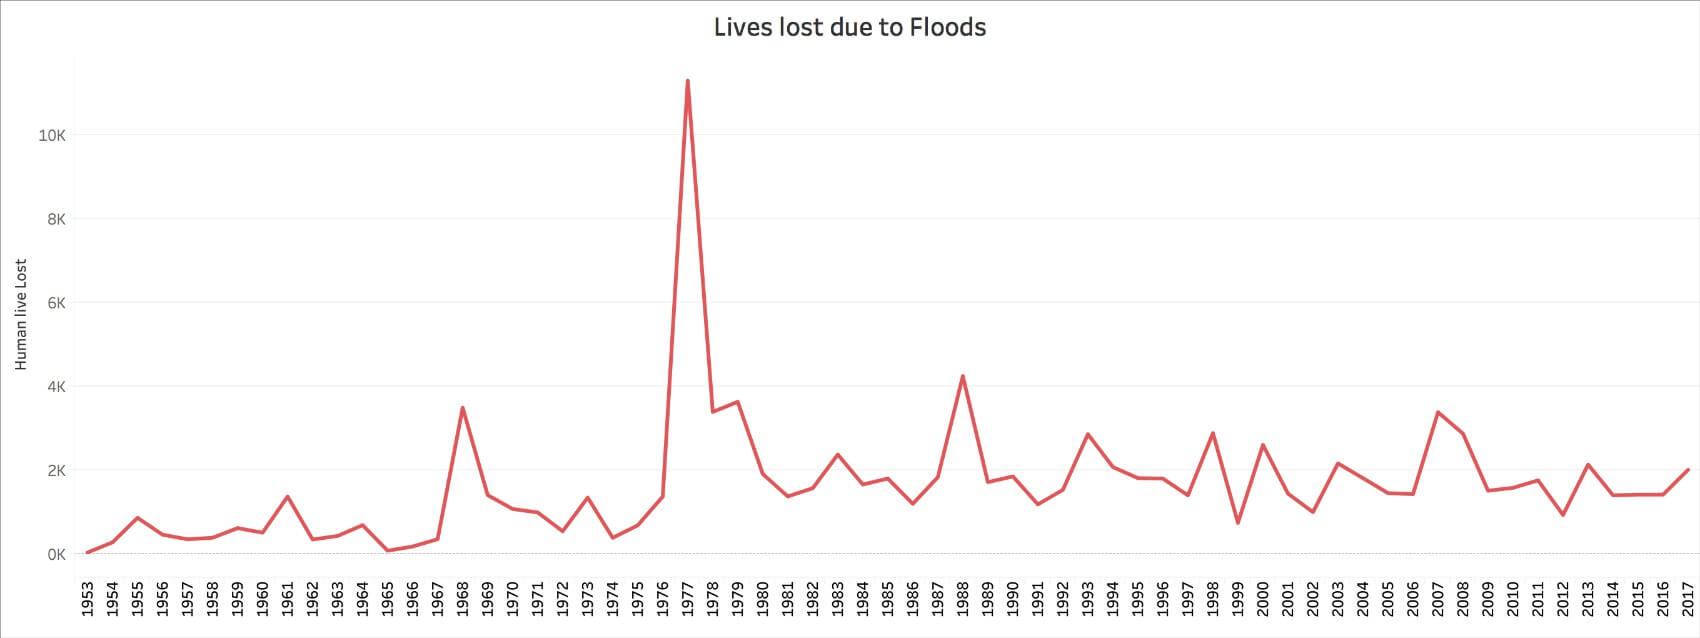 Kerala floods__lives lost